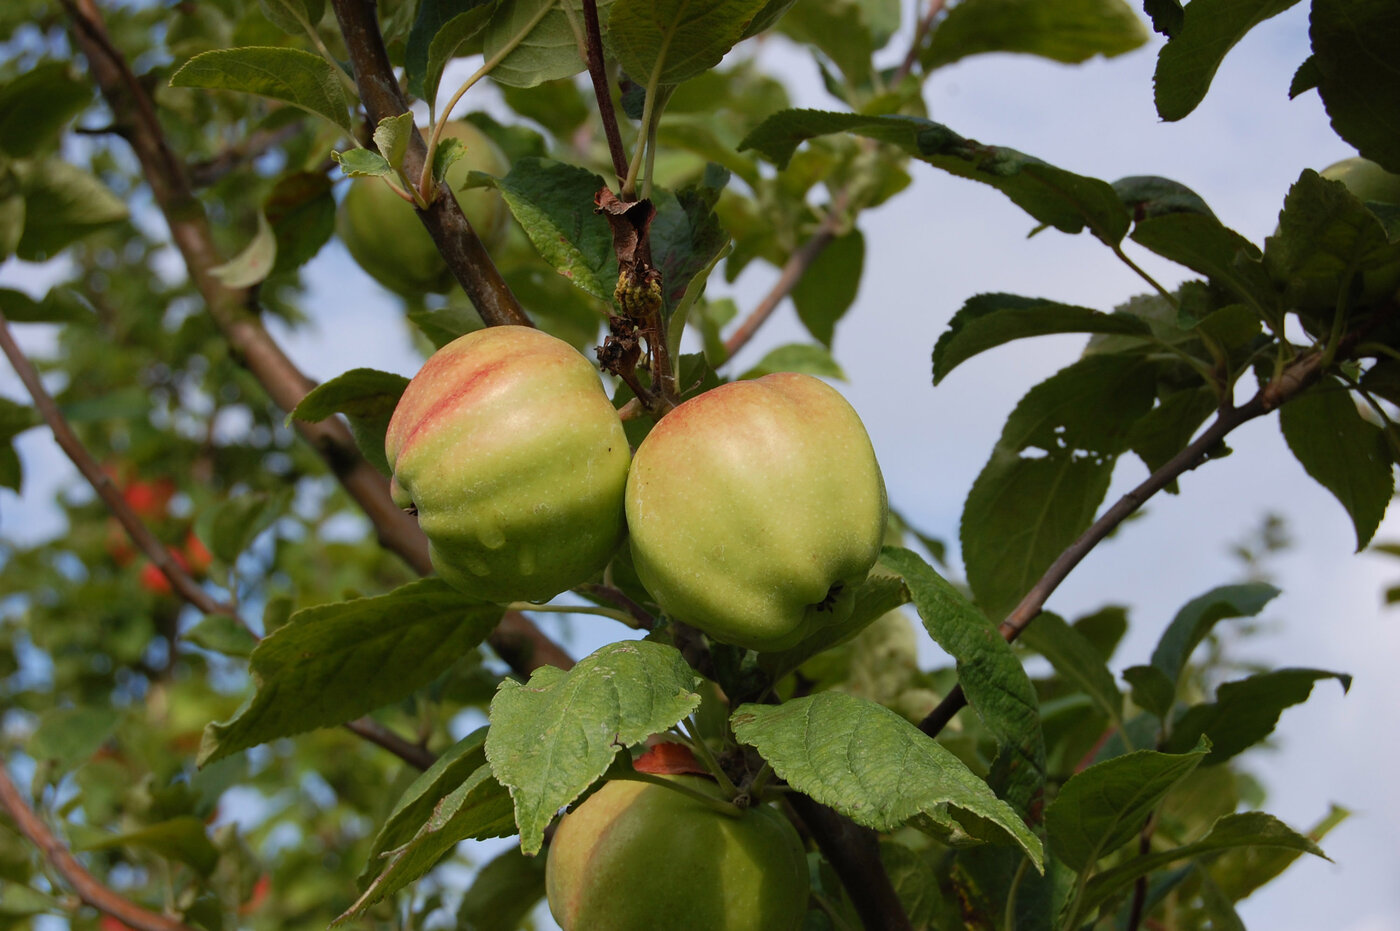 Apfelbaum mit mehreren reifen Äpfeln der Sorte "Uelzener Kalvill"